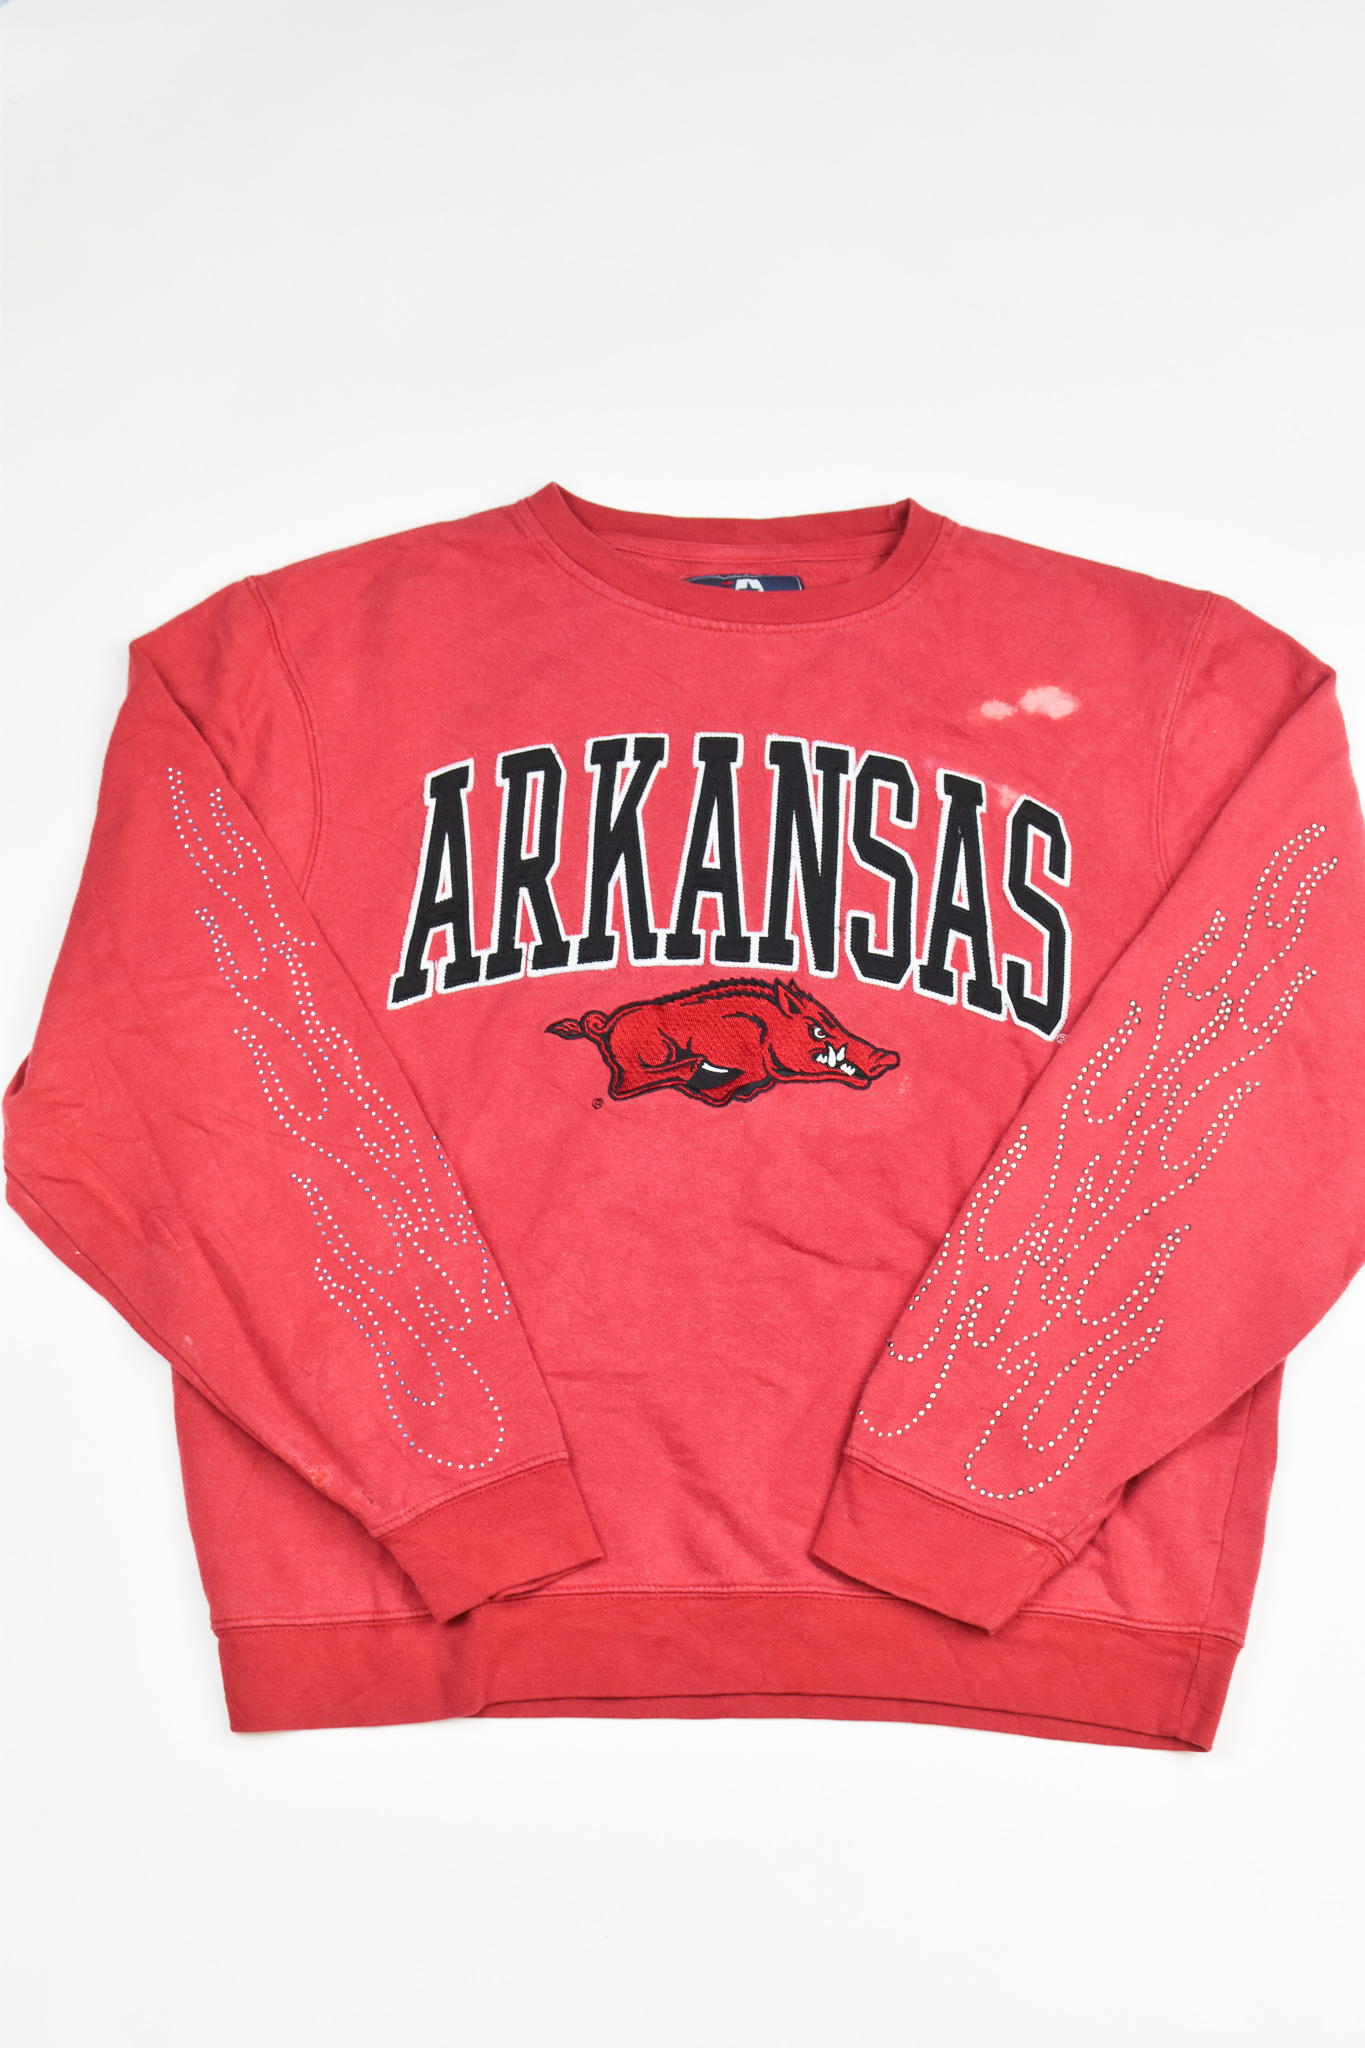 Upcycled Vintage Arkansas Flame Sweatshirt